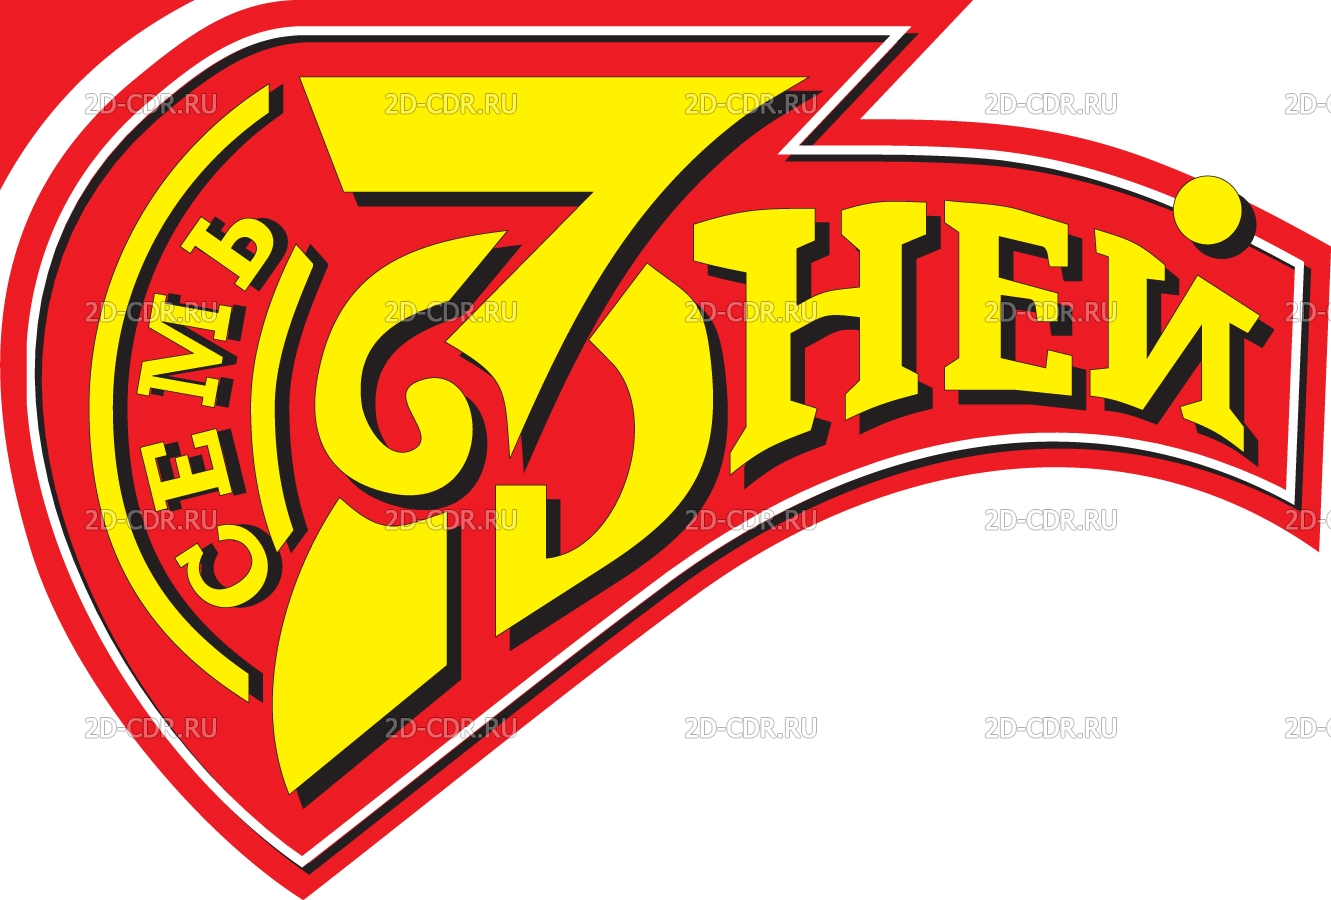 7 days ru. 7 Дней логотип. 7 Дней журнал лого. 7 Дней ру. 7дней.ру логотип.